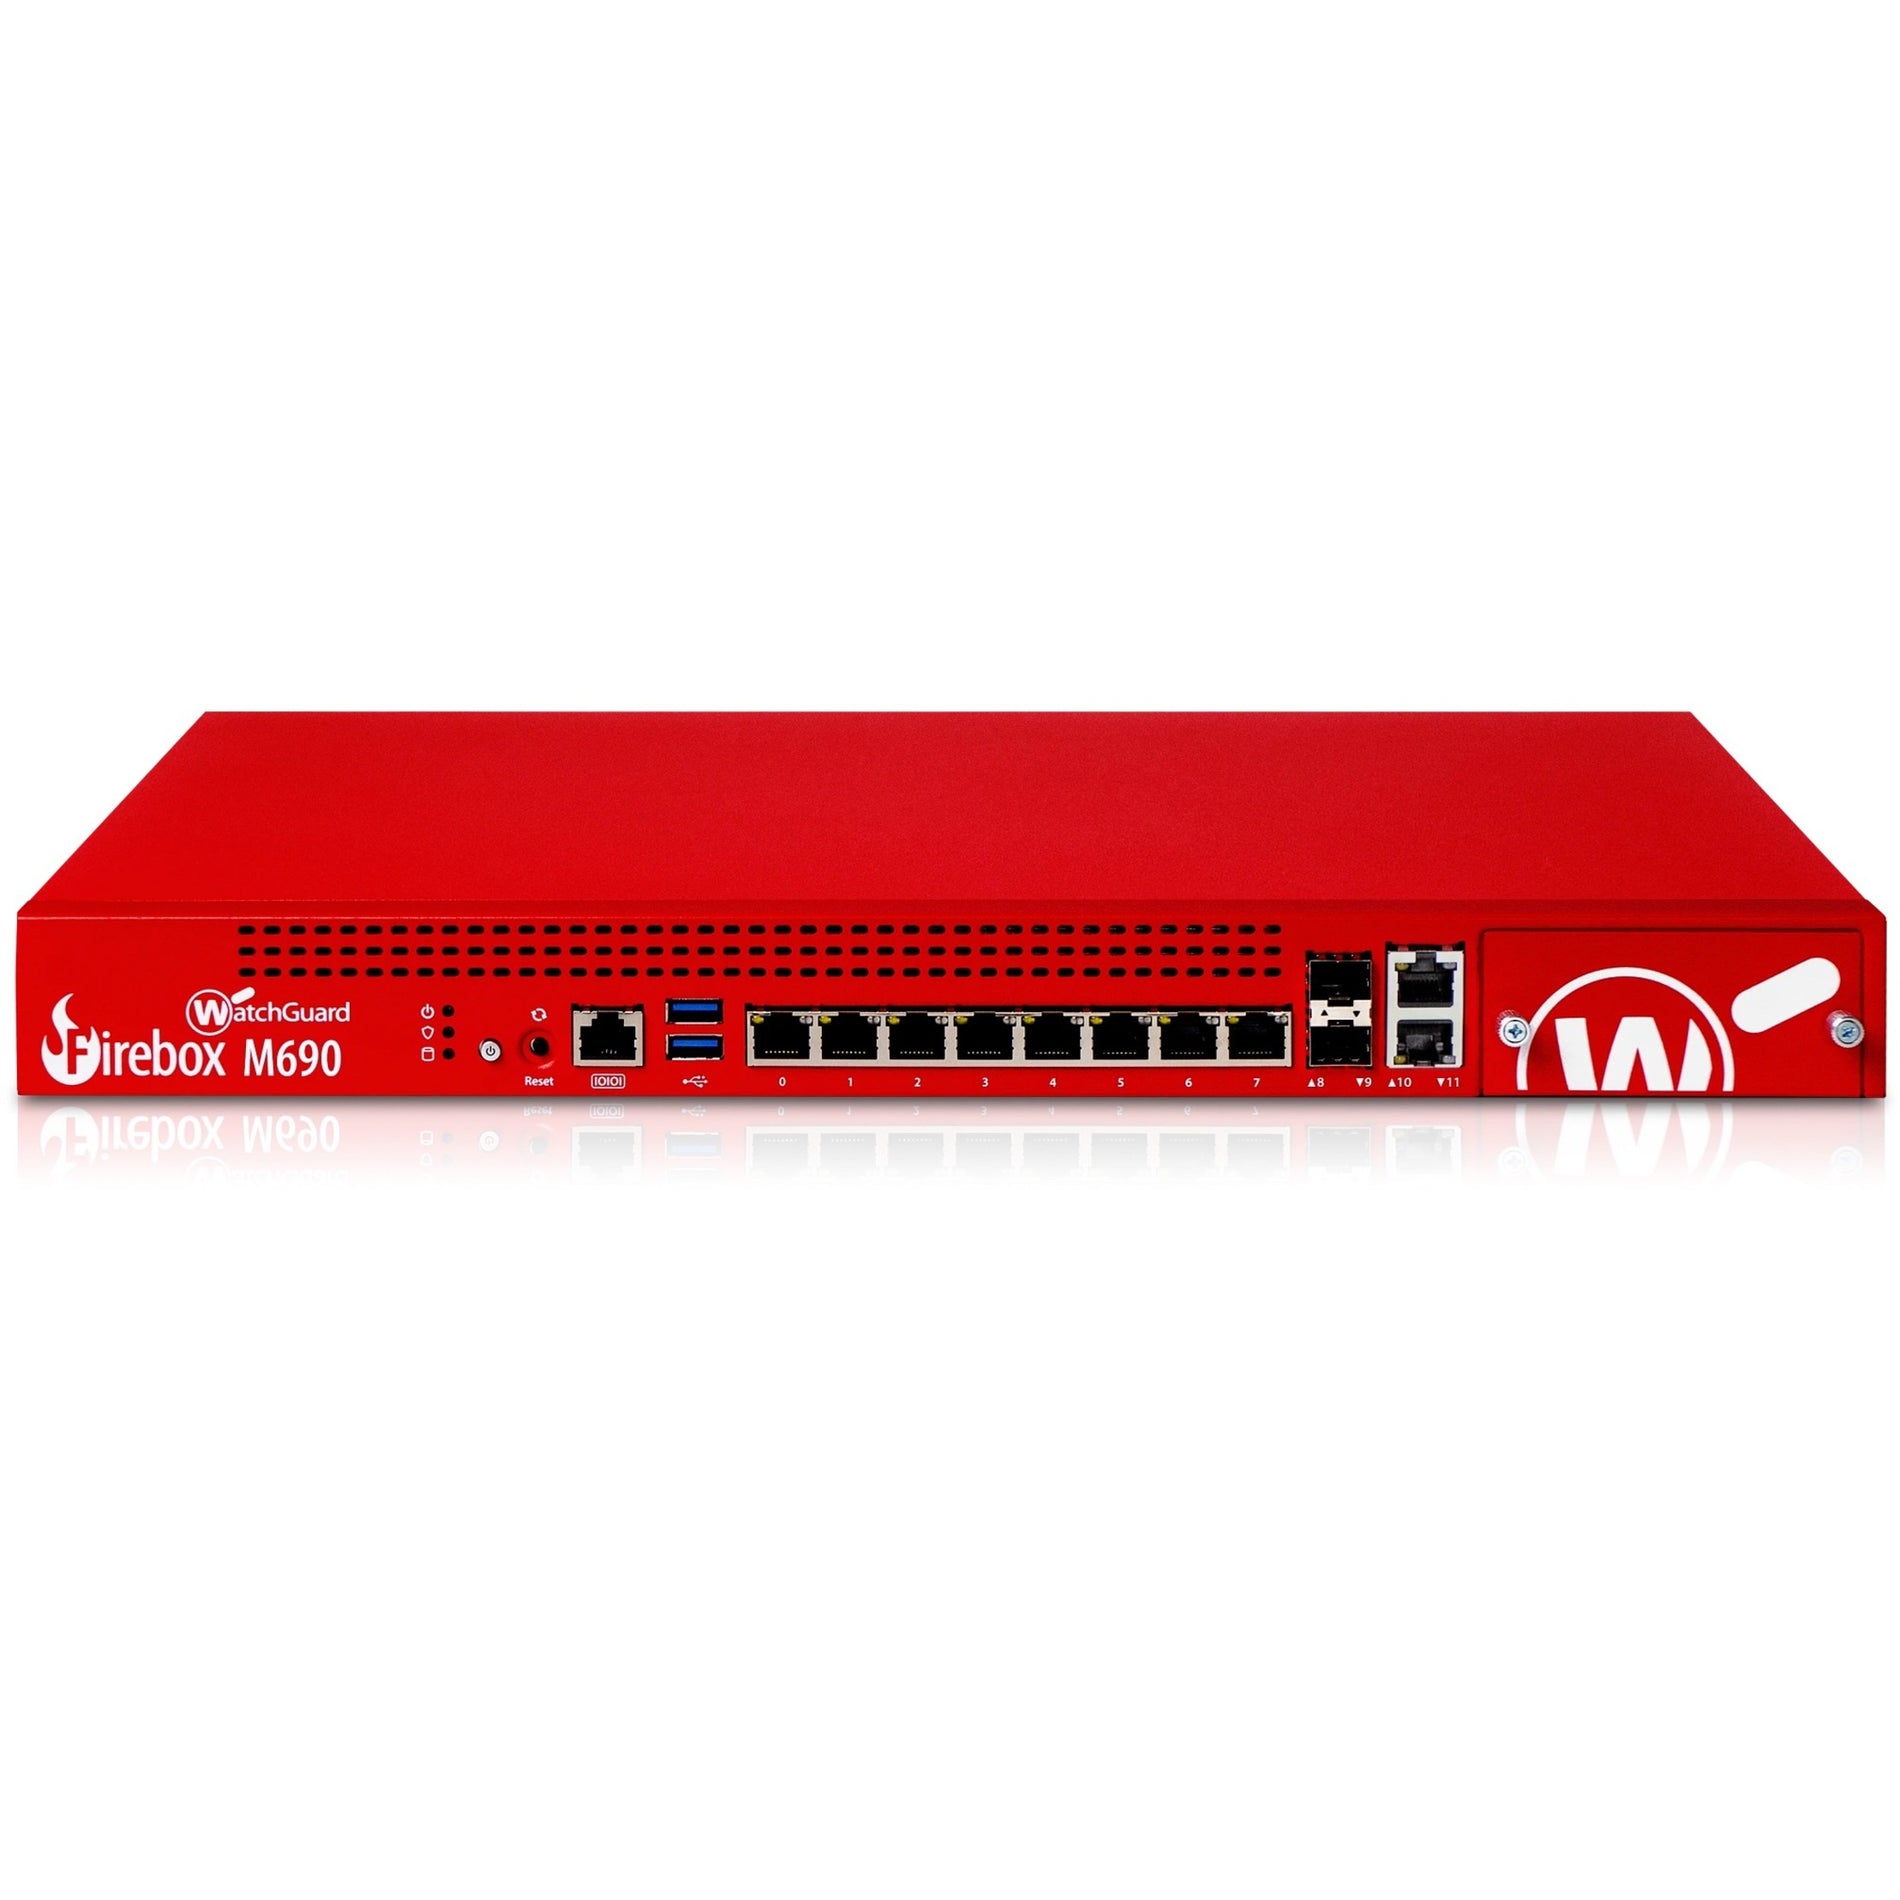 WatchGuard WGM69001603 Firebox M690 High Availability Firewall, Malware Protection, VPN Connectivity, Ransomware Protection